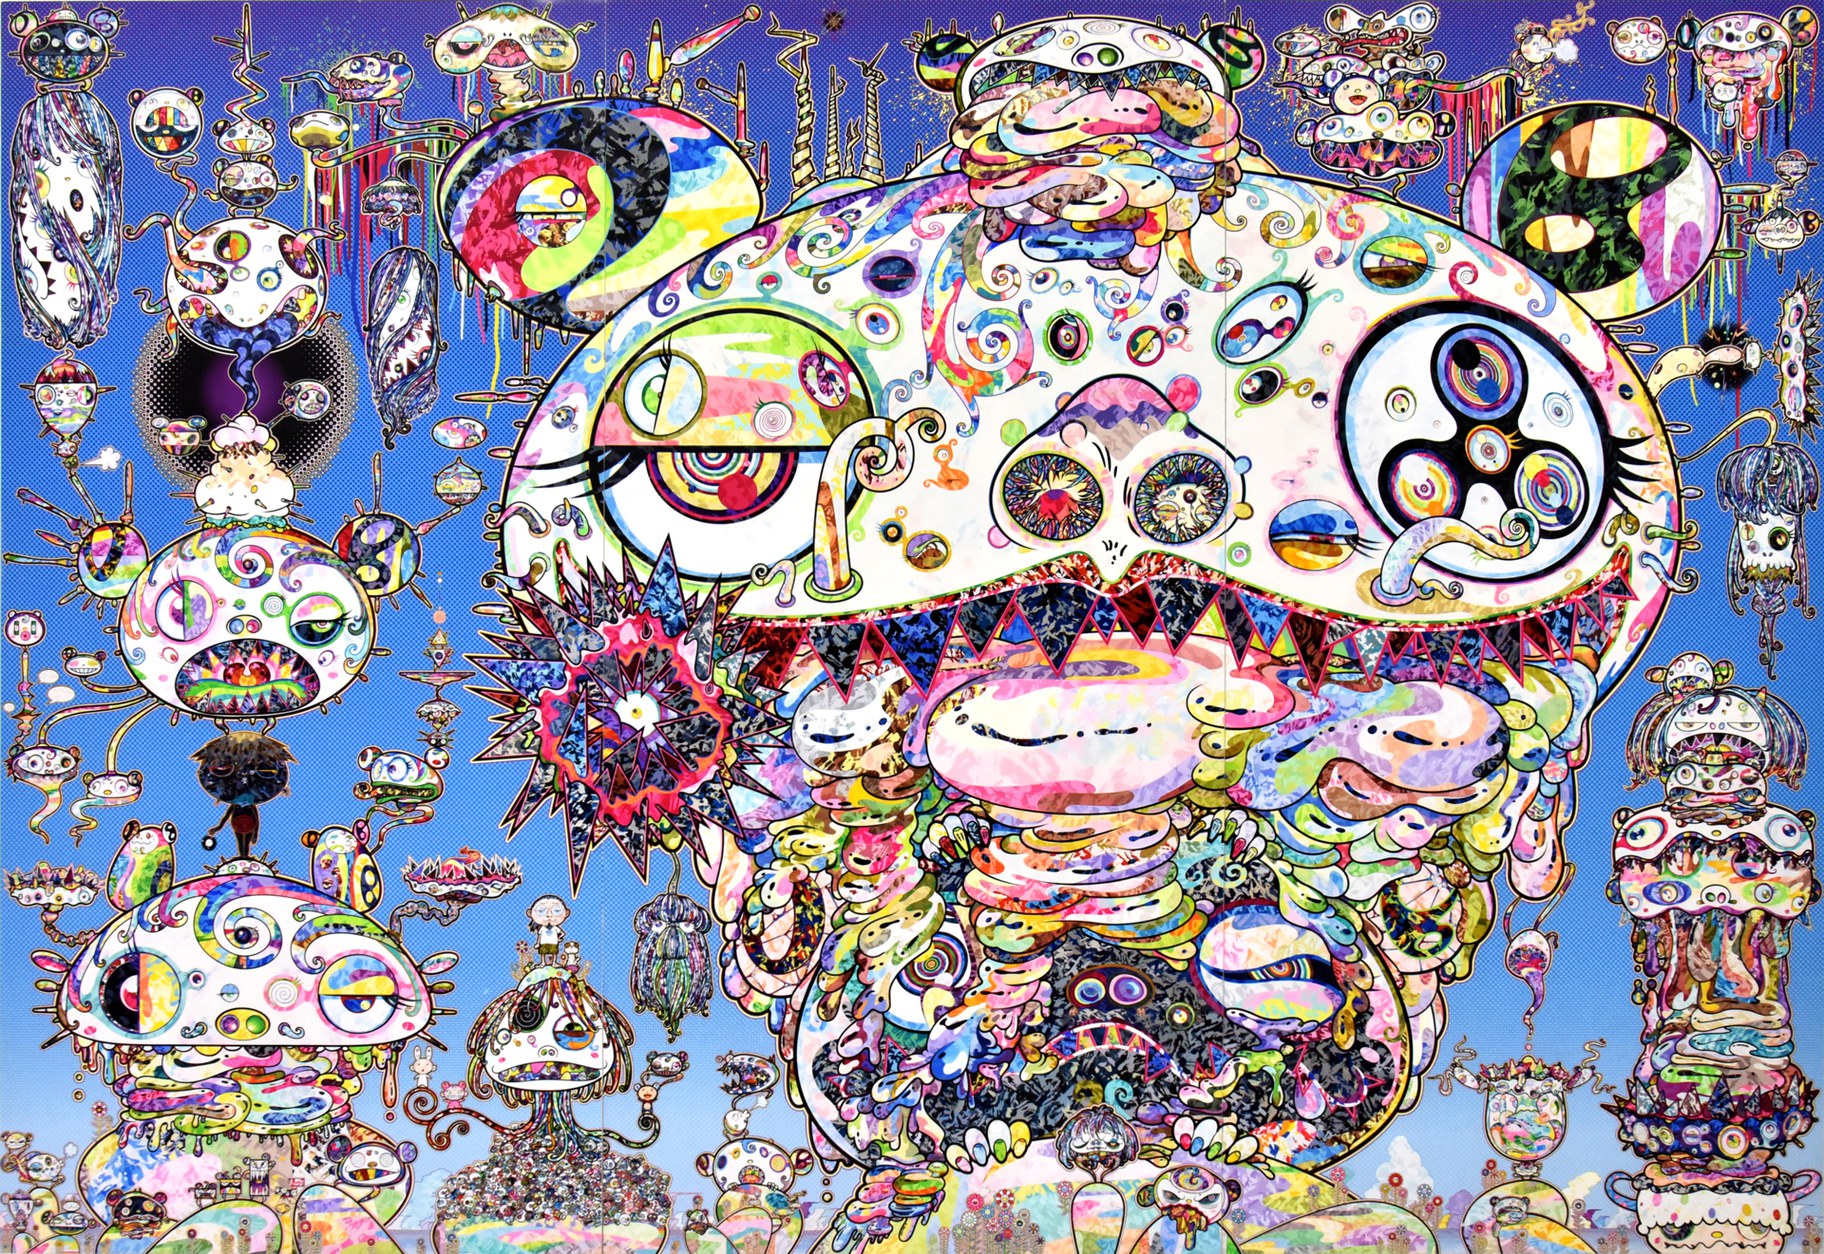 Takashi Murakami SF show observes consumerism, social media